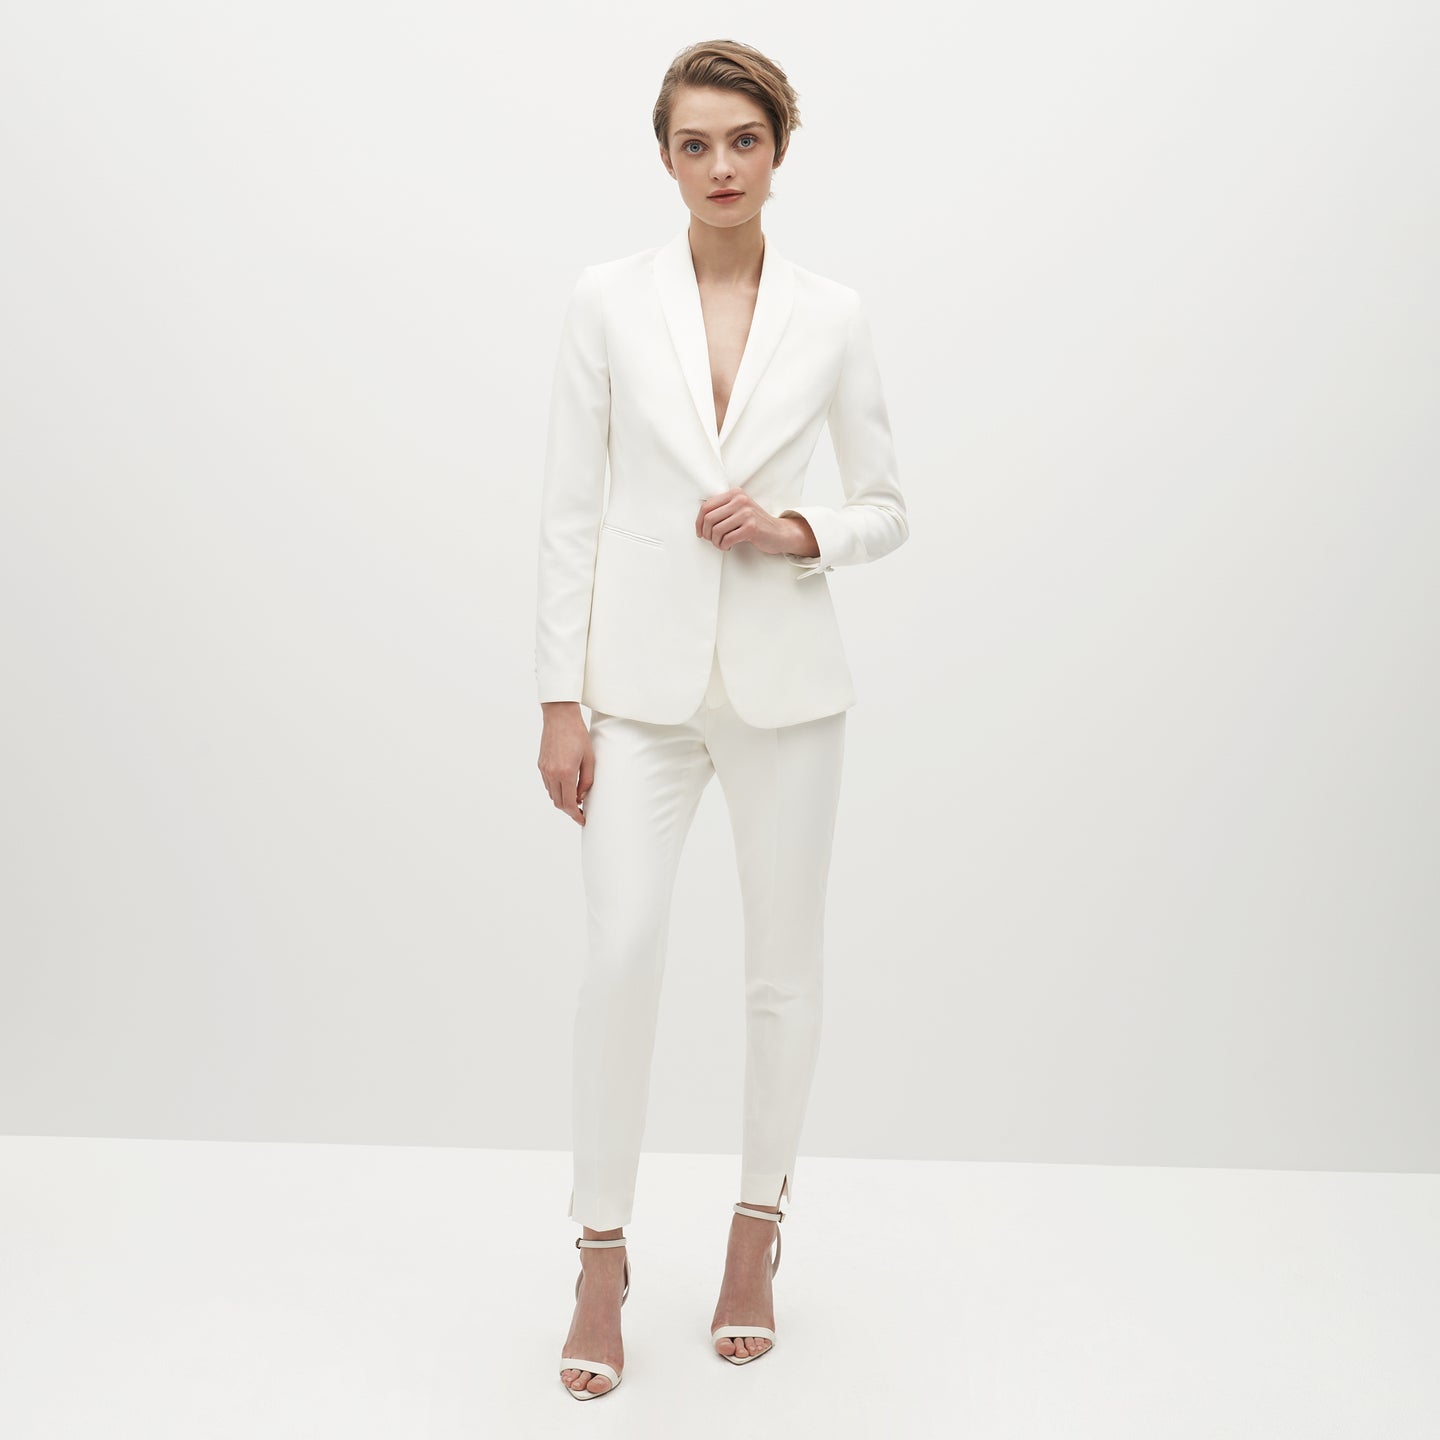 Women's White Tuxedo - The Groomsman Suit